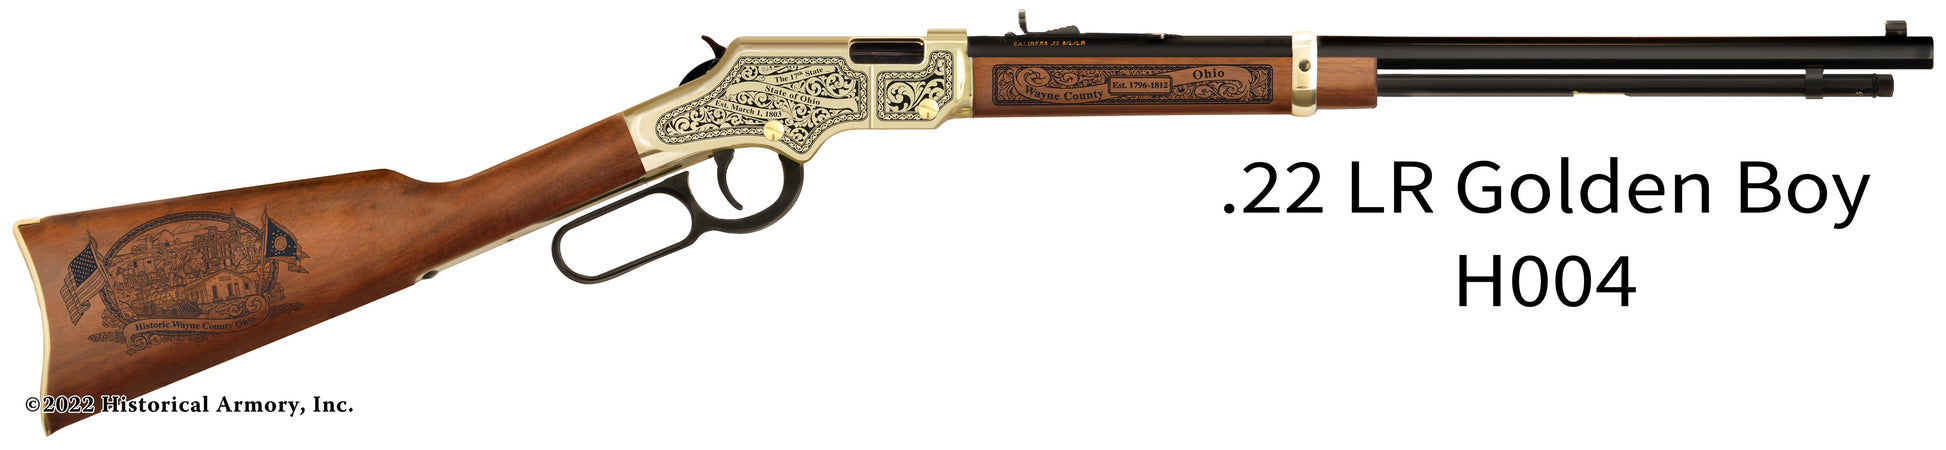 Wayne County Ohio Engraved Henry Golden Boy Rifle